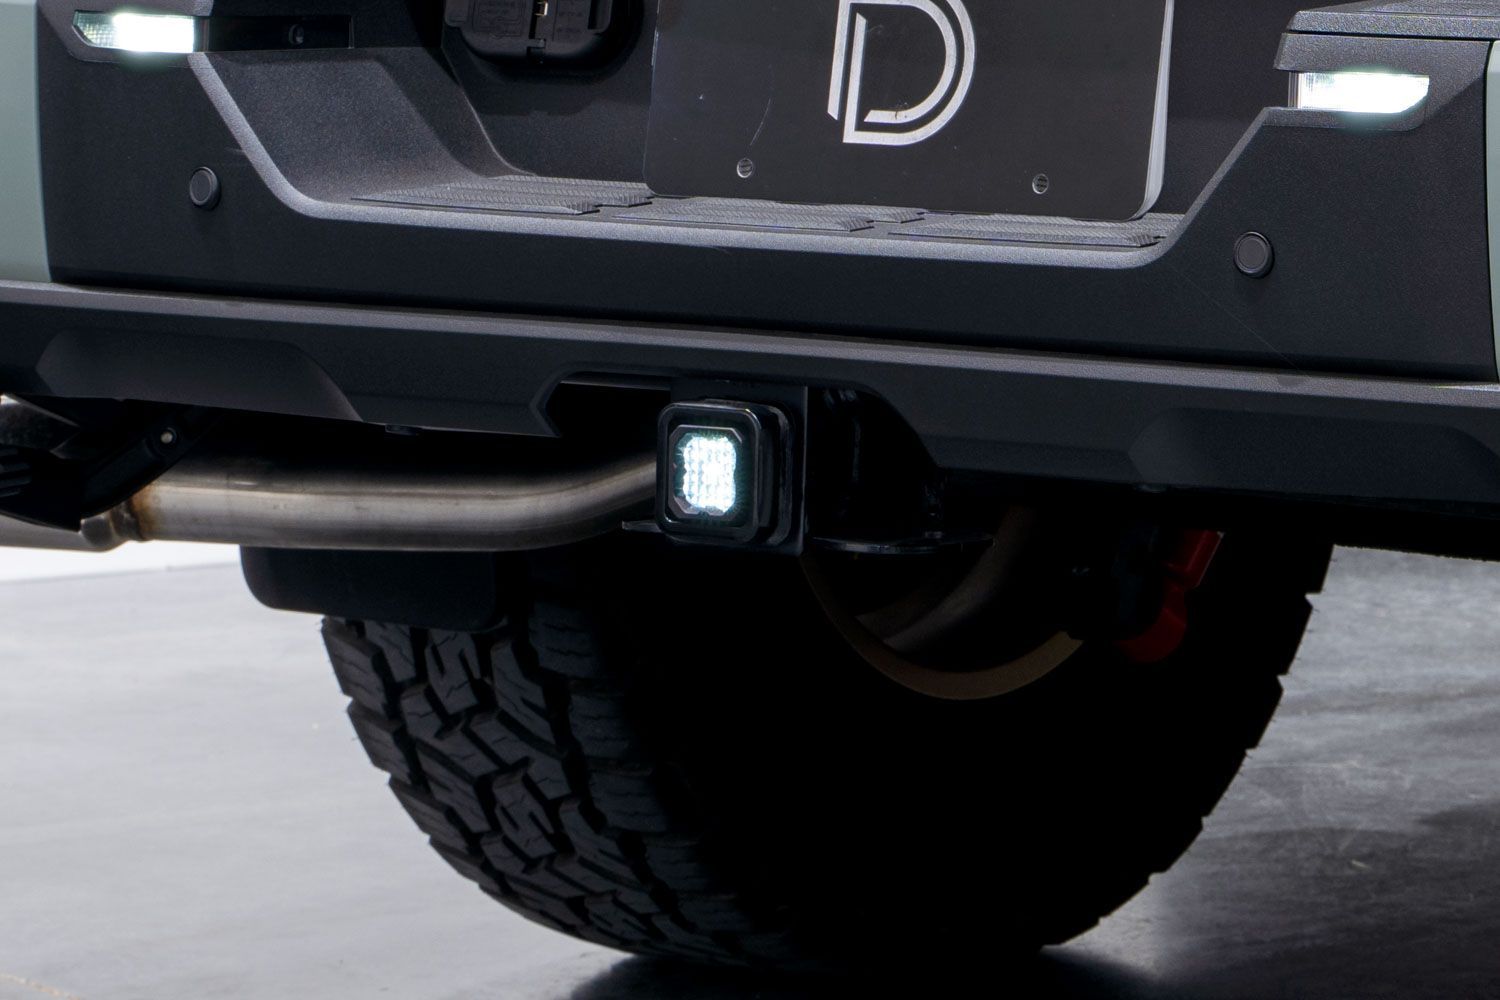 HitchMount LED Pod Kit installed as trailer hitch light